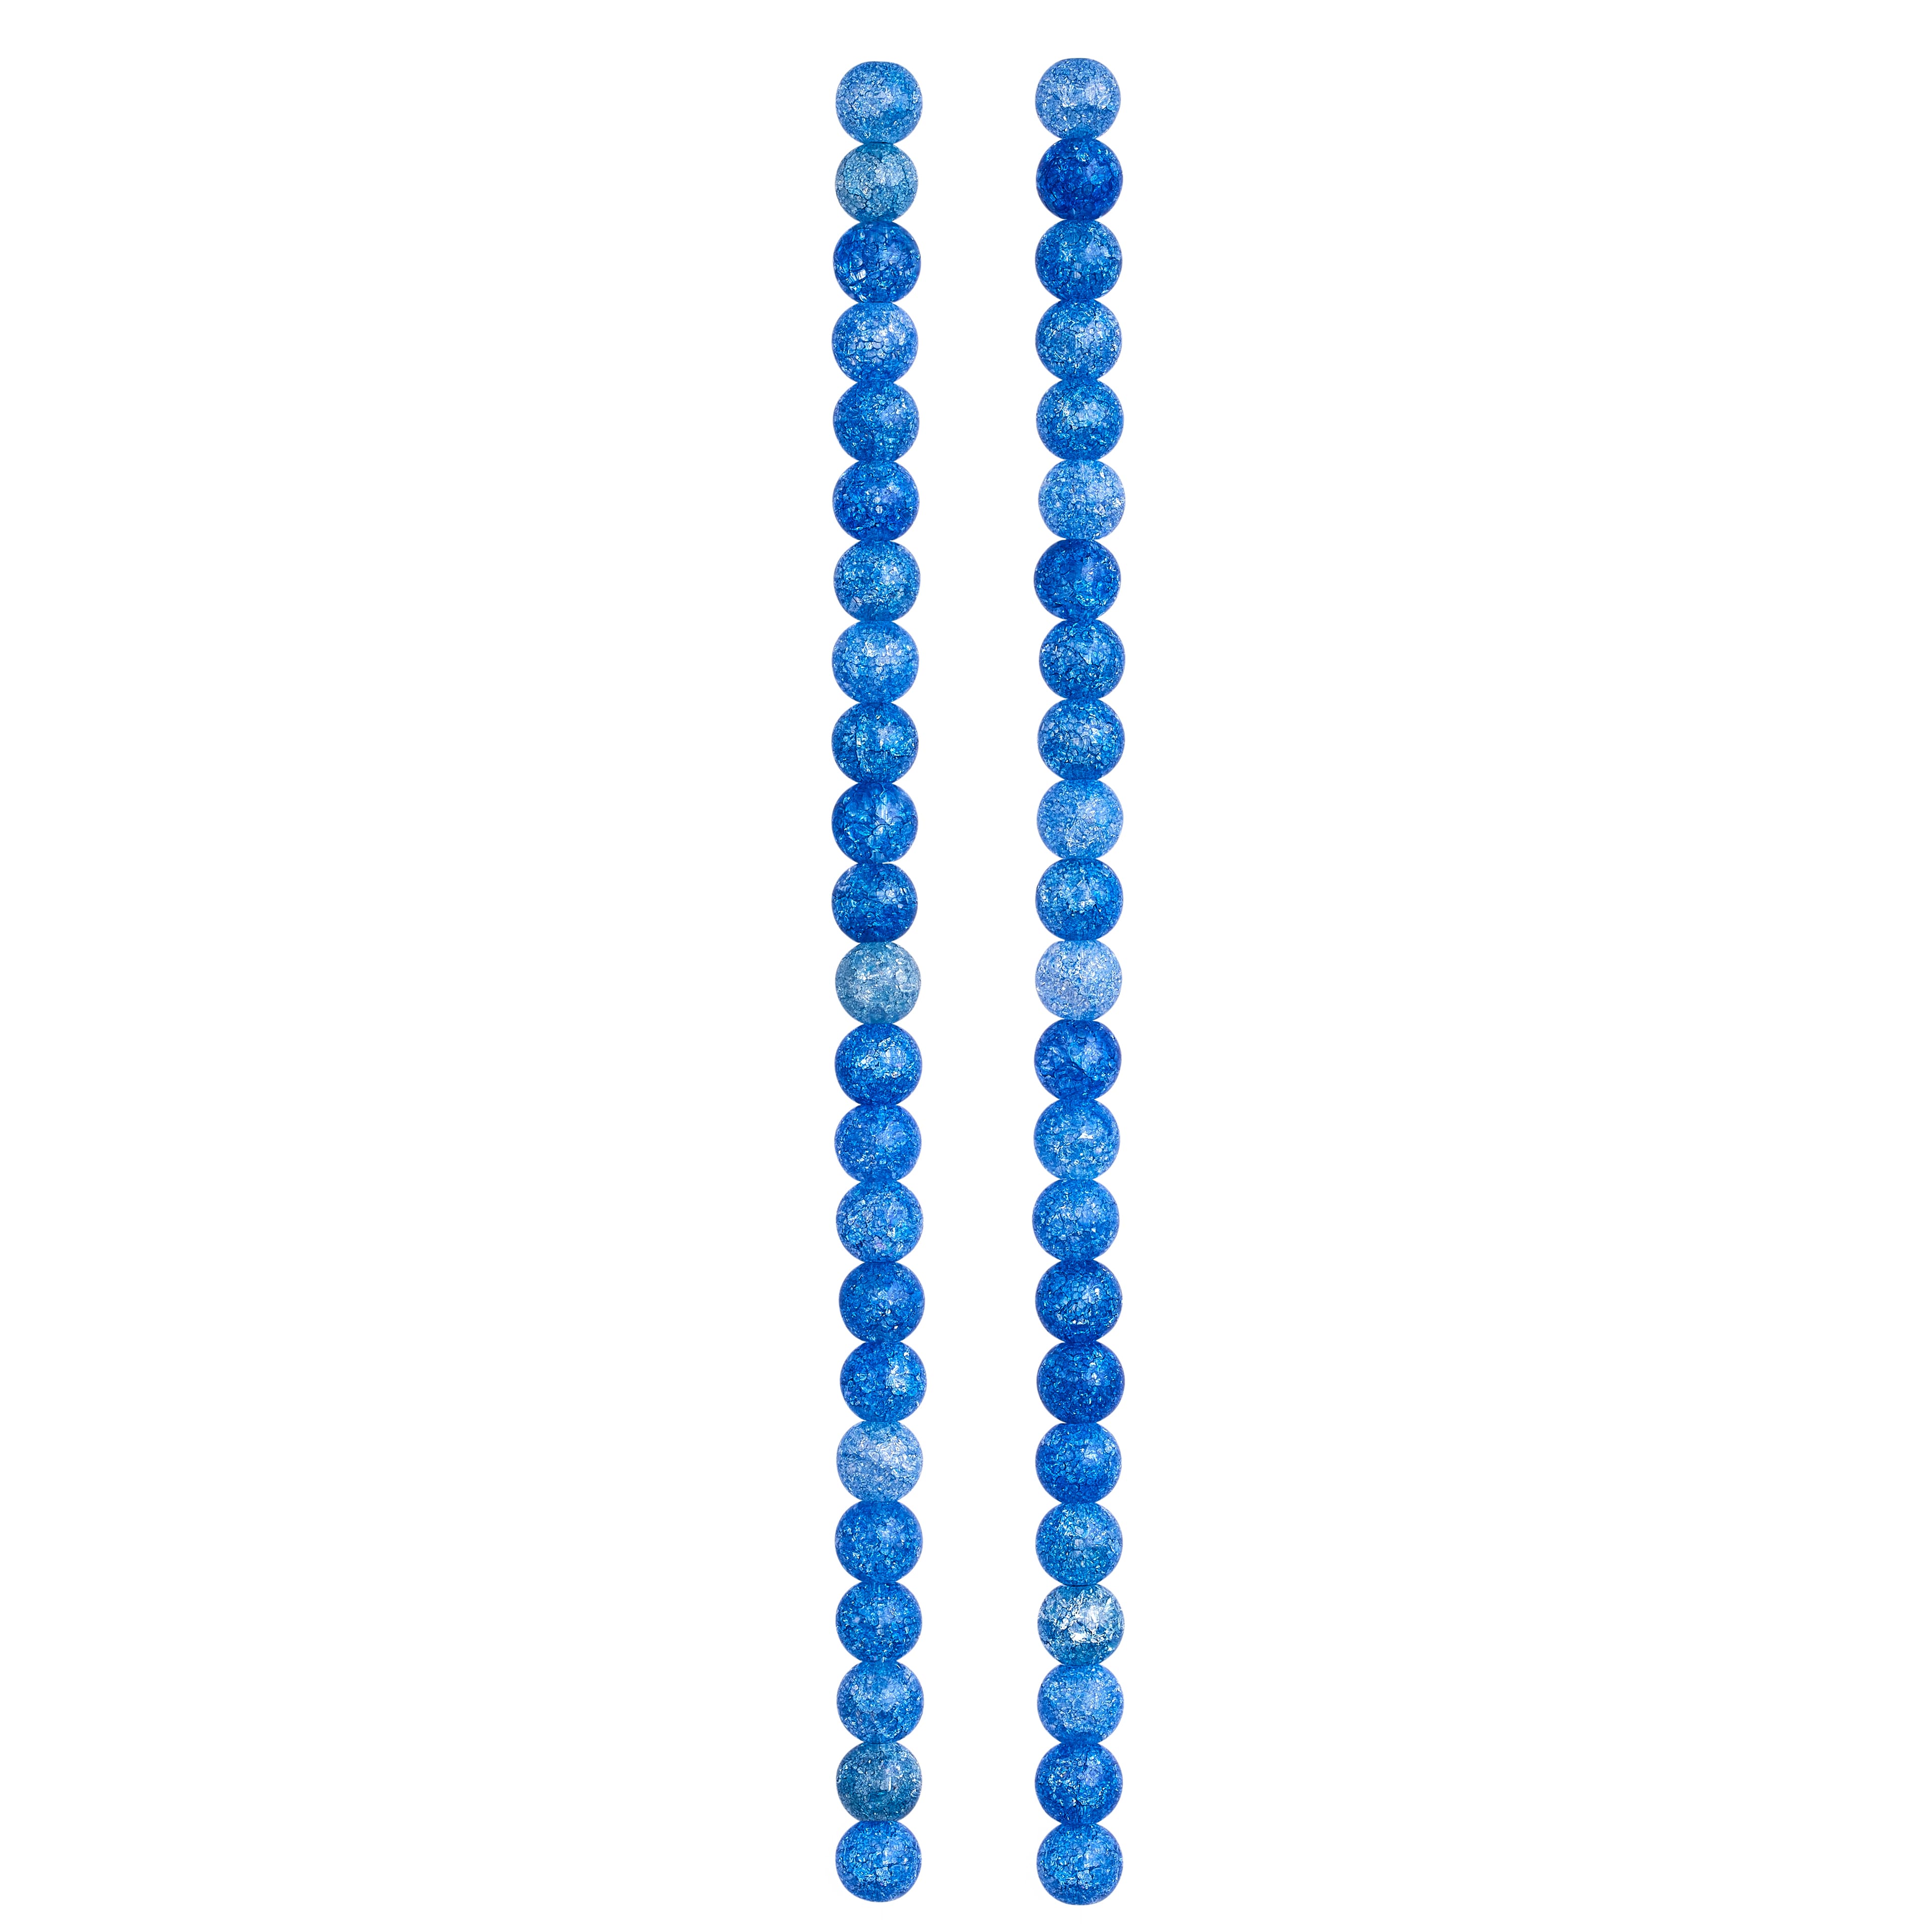 Blue Crackle Quartz Round Beads, 6mm by Bead Landing&#x2122;